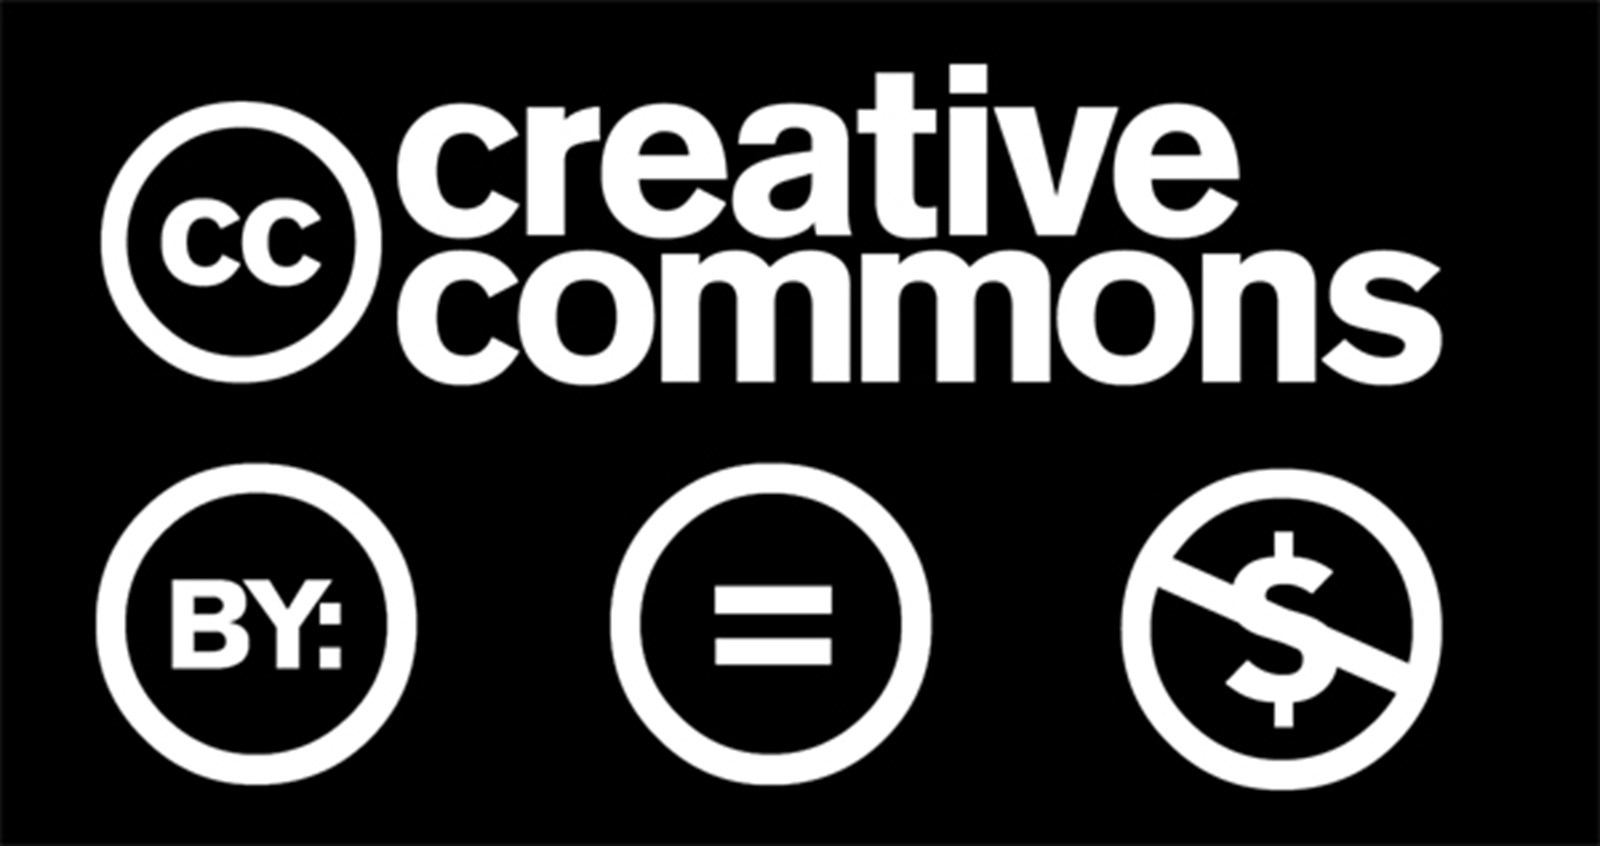 Creative commons attribution 4.0. Creative Commons значки. Креатив Коммонс. Creative Commons License. Creative Commons картинки.